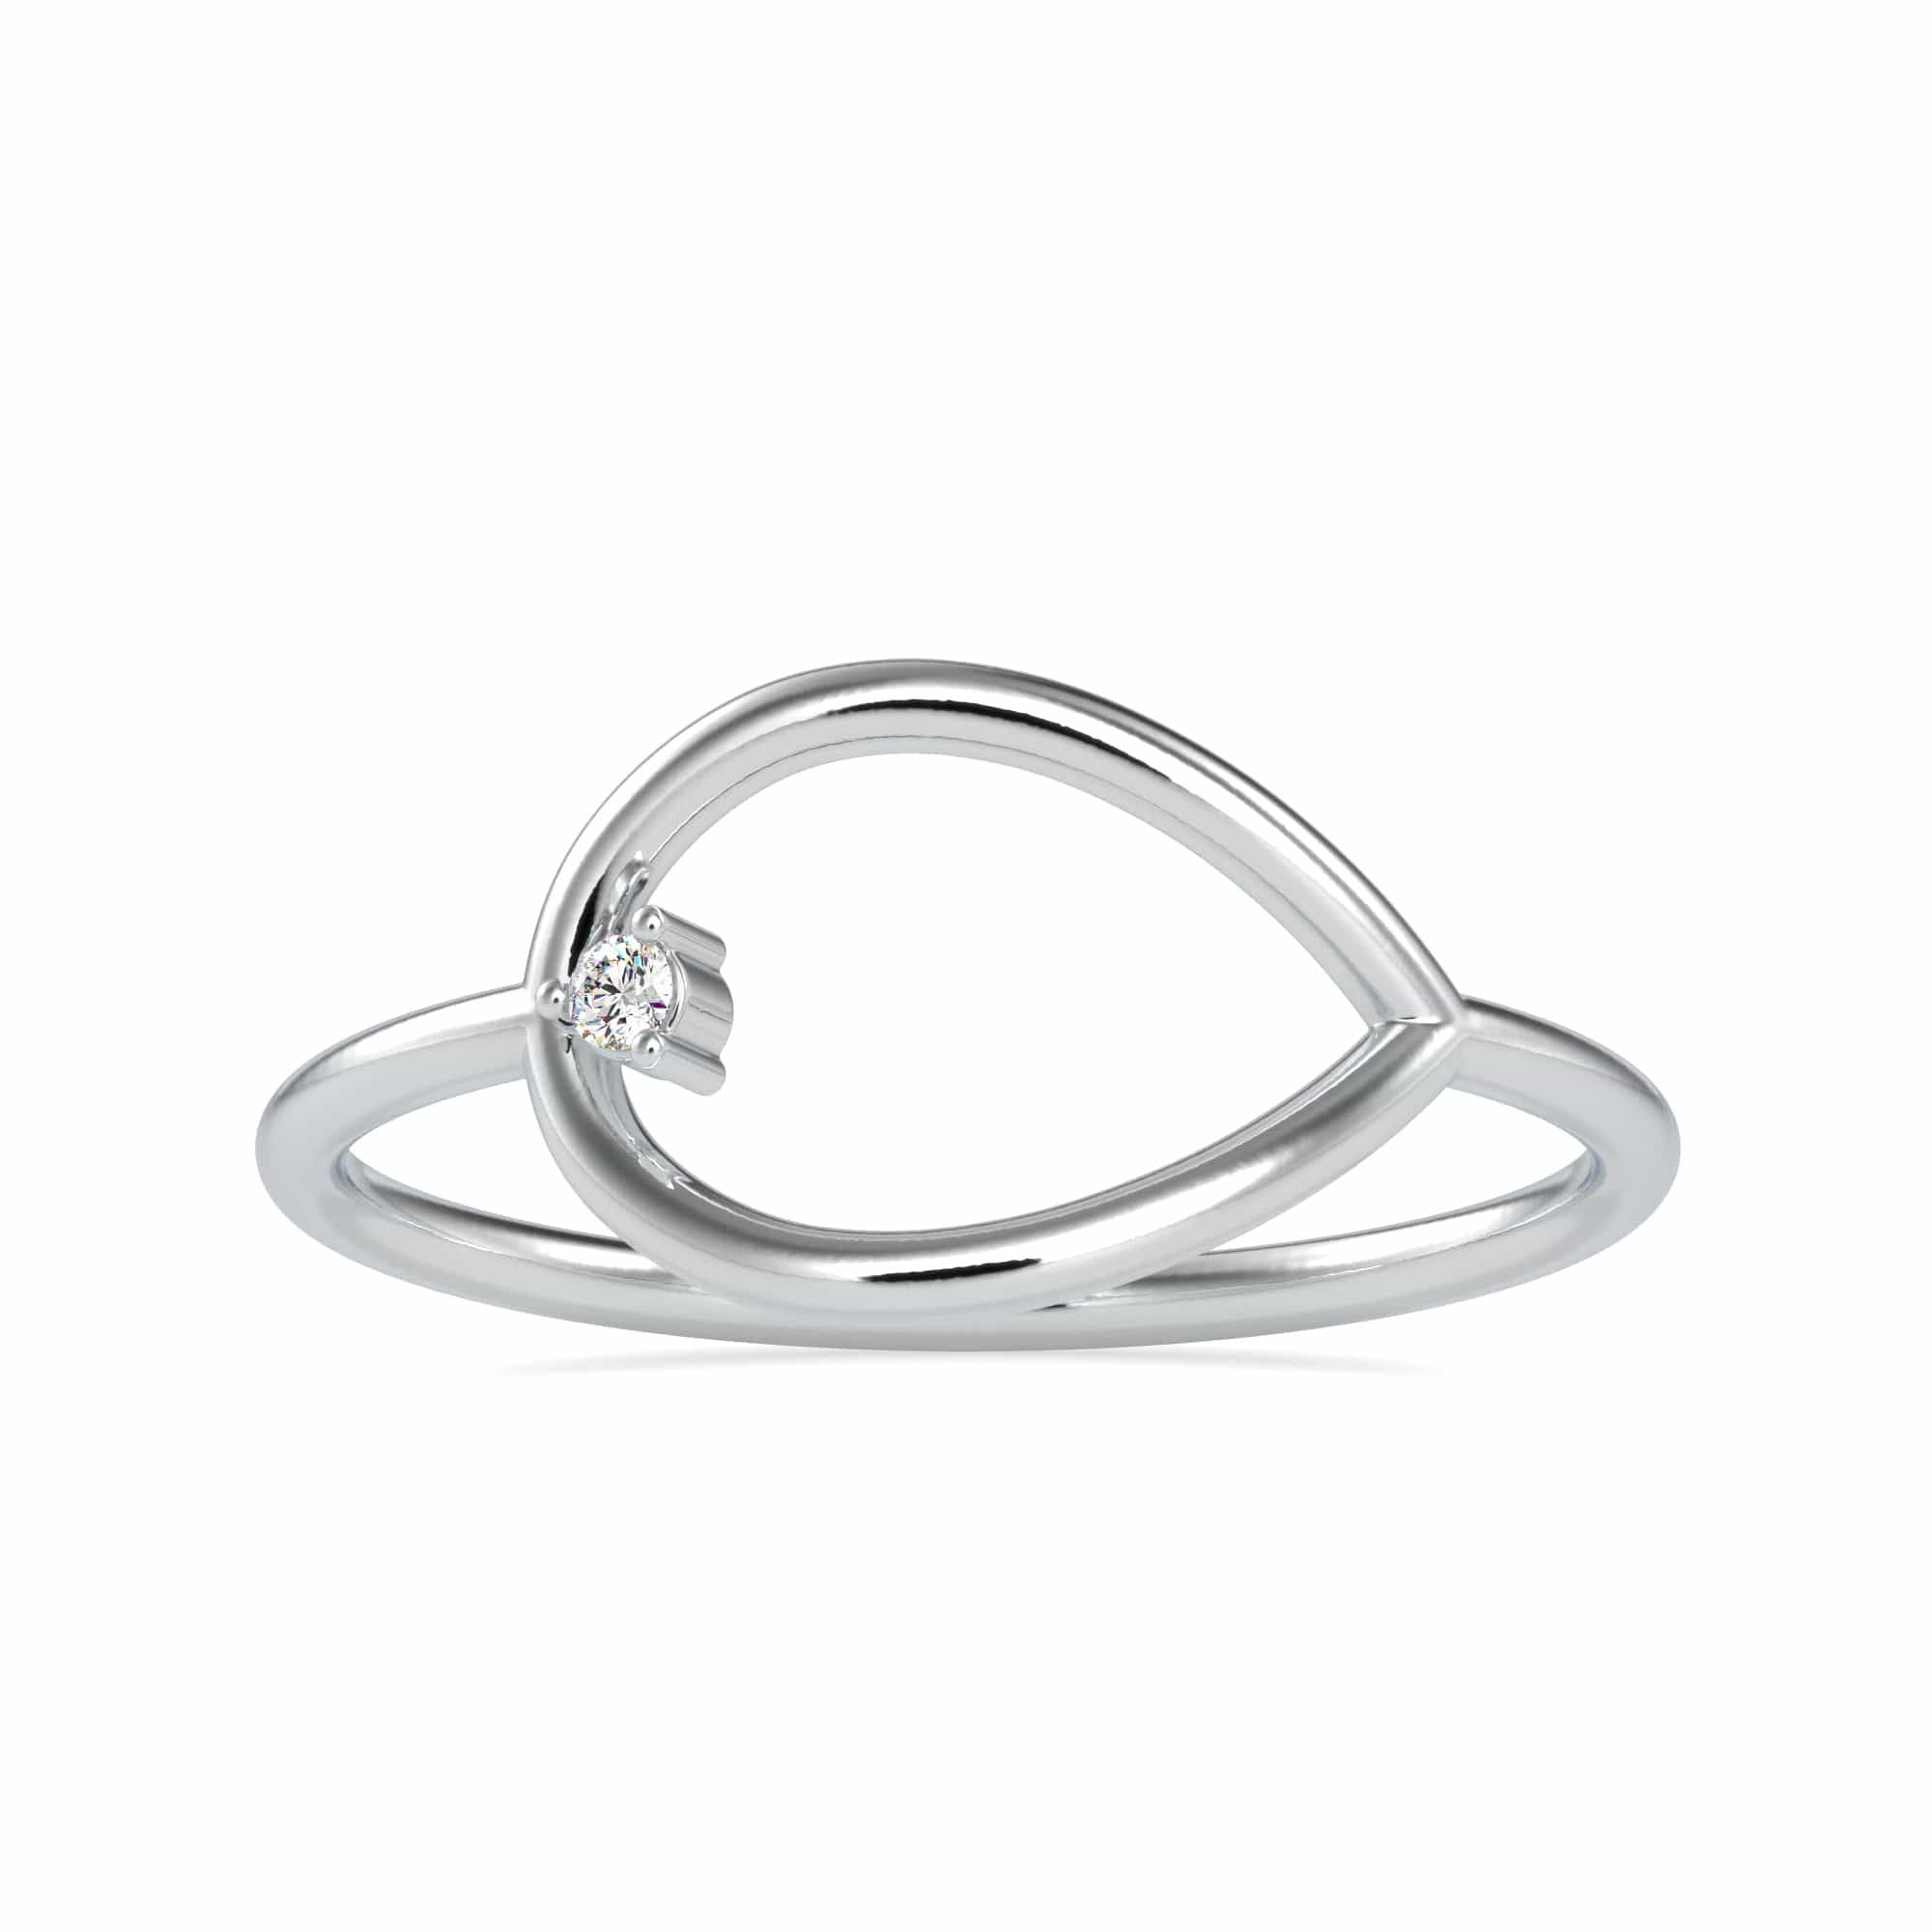 Malabar Solitaire Diamond Rings Starting 54K Designs With Price| Latest  2023 Solitaire Diamond Rings - YouTube